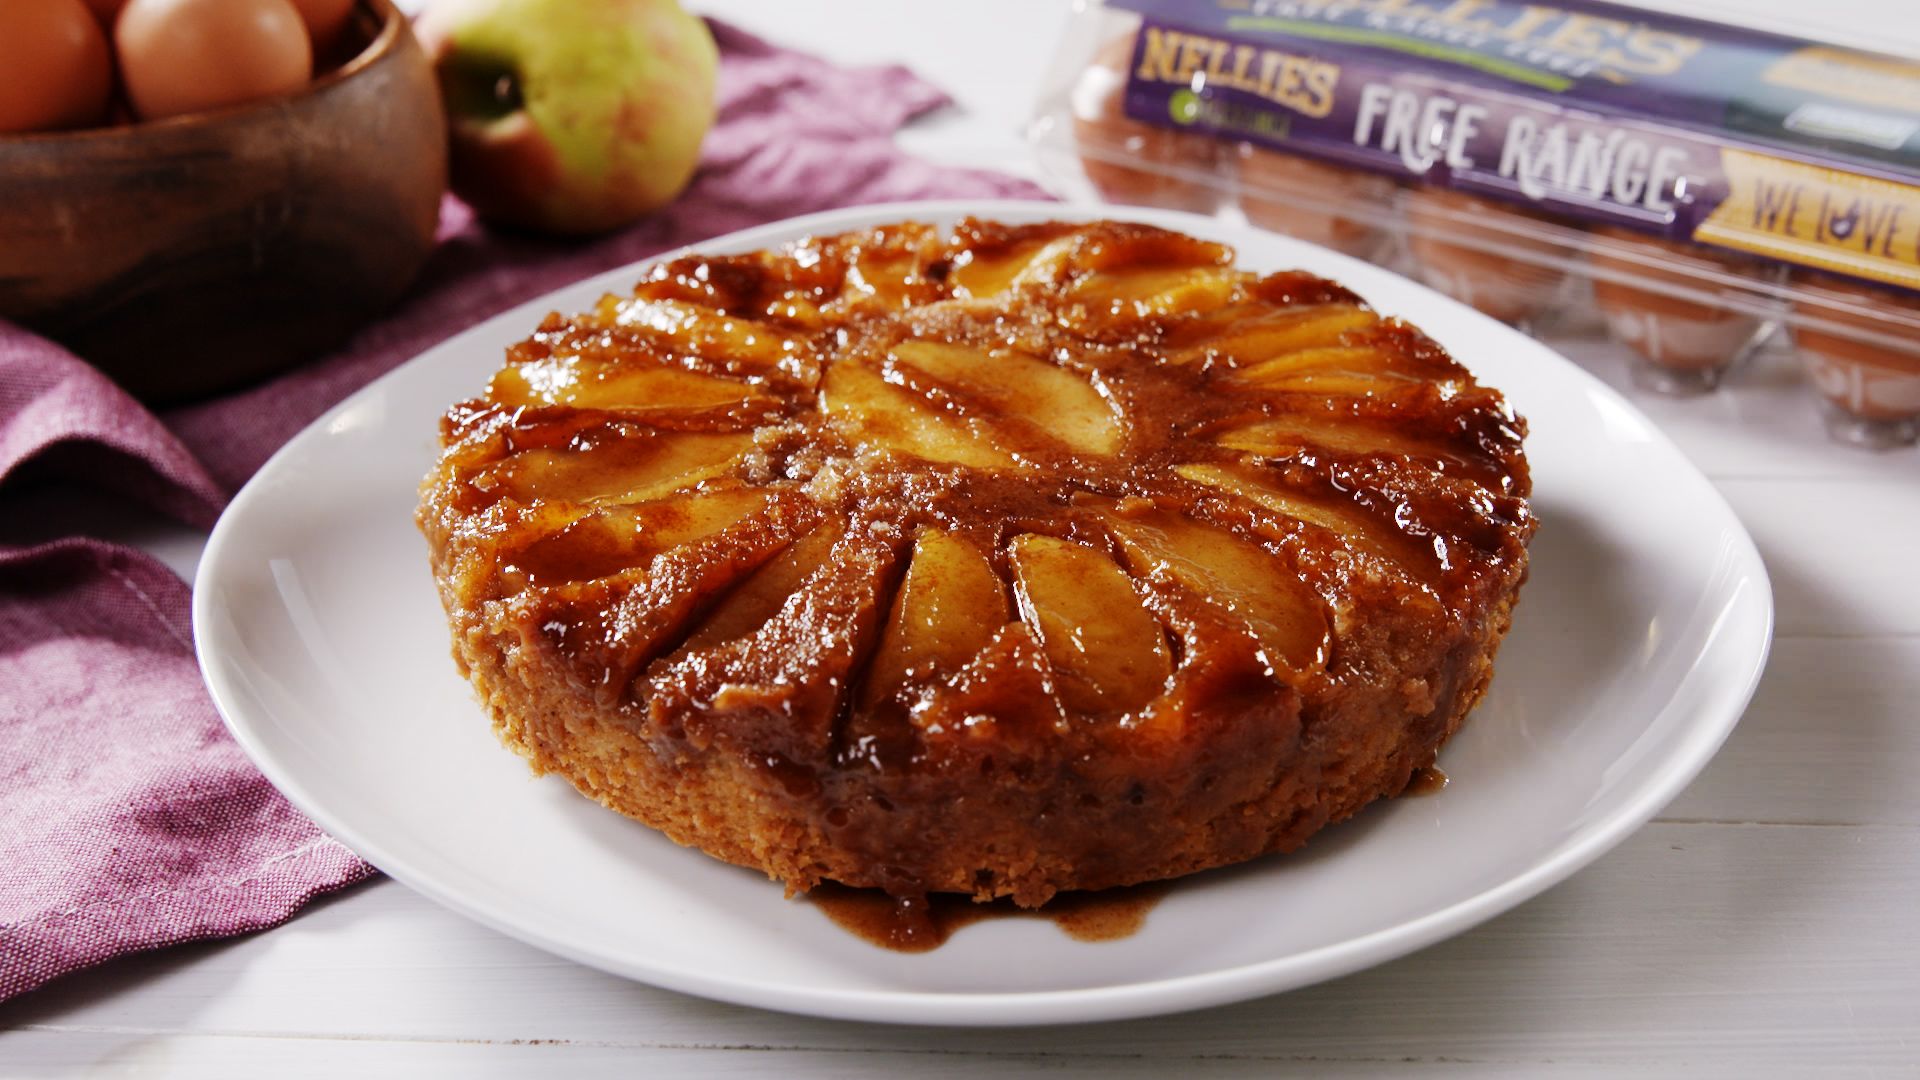 Magnolia Monday: Apple Cake with Cinnamon Sugar Topping